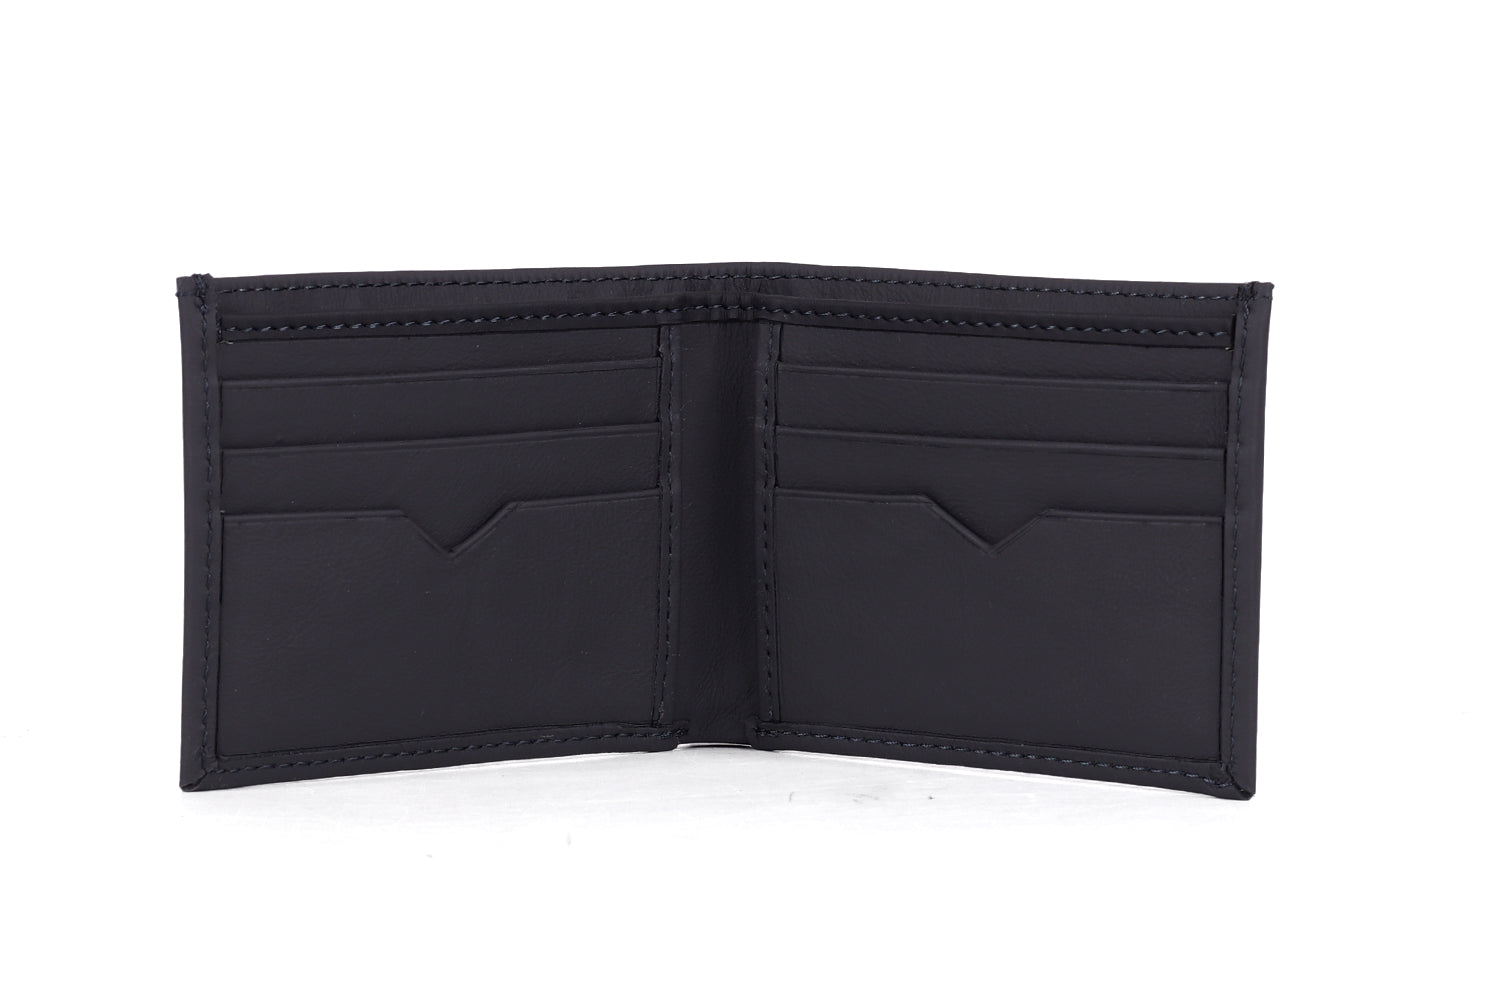 Grey leather slim wallet for men online india